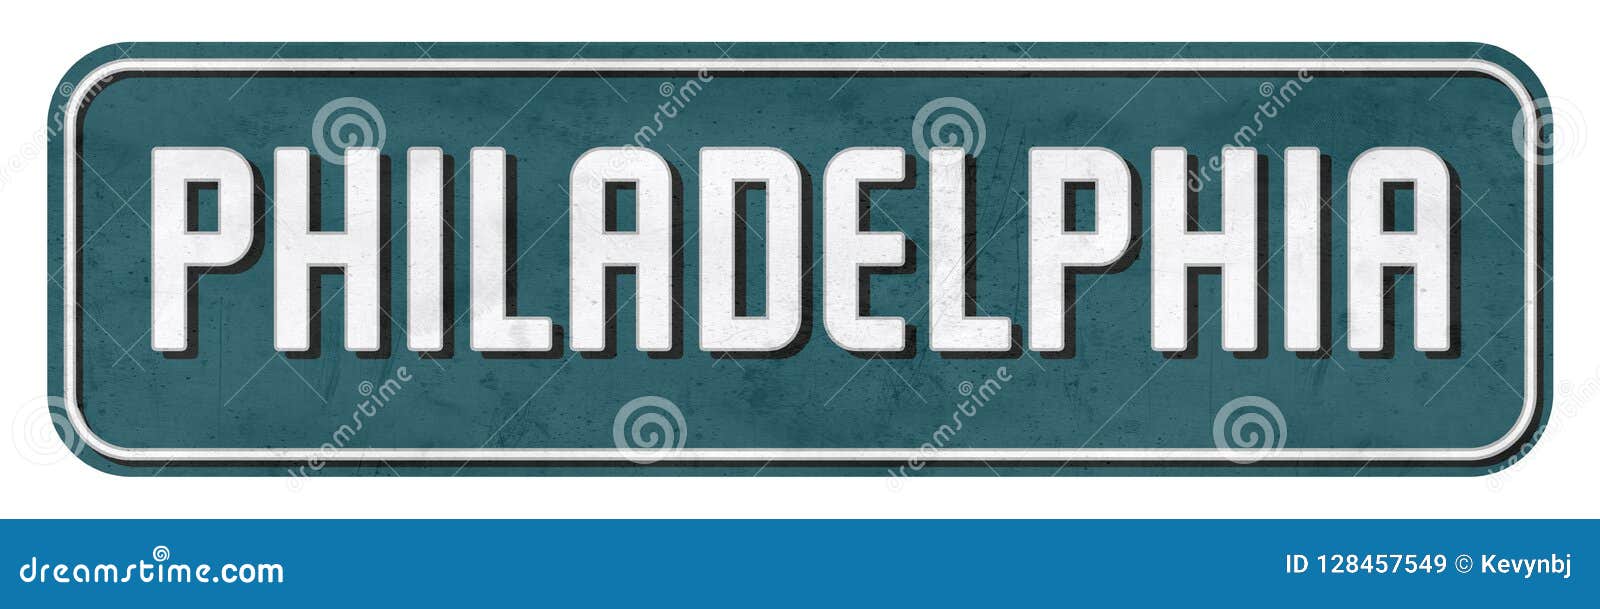 philadelphia street sign in eagles colors nfl